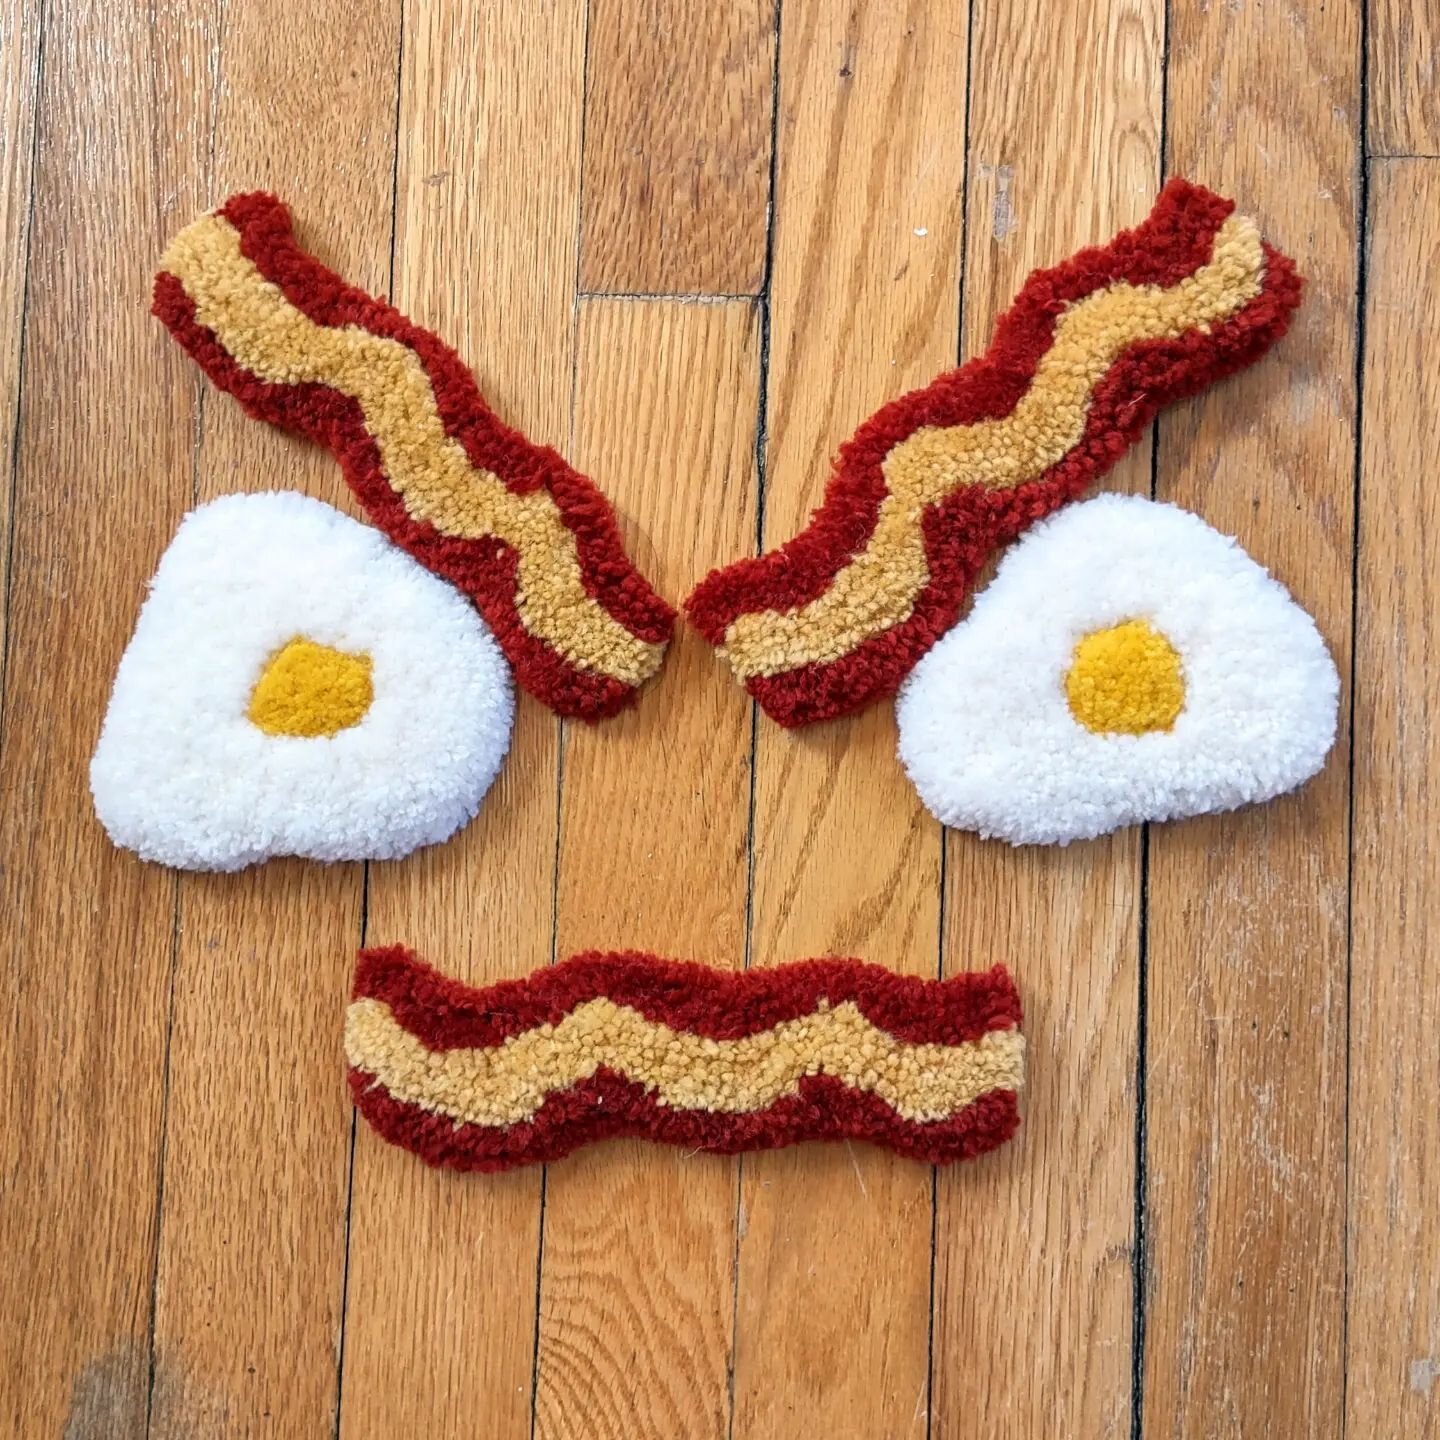 Tag yourself 😡😄😖

#rug #rugmaking #tuft #tufting #rugtufting #tuftinggun #tuftingart #smallbusiness #tufttheworld #tufted #rugs #art #crafts #cartoons #memeart #eggs #bacon #breakfast #foodrug #eggrug